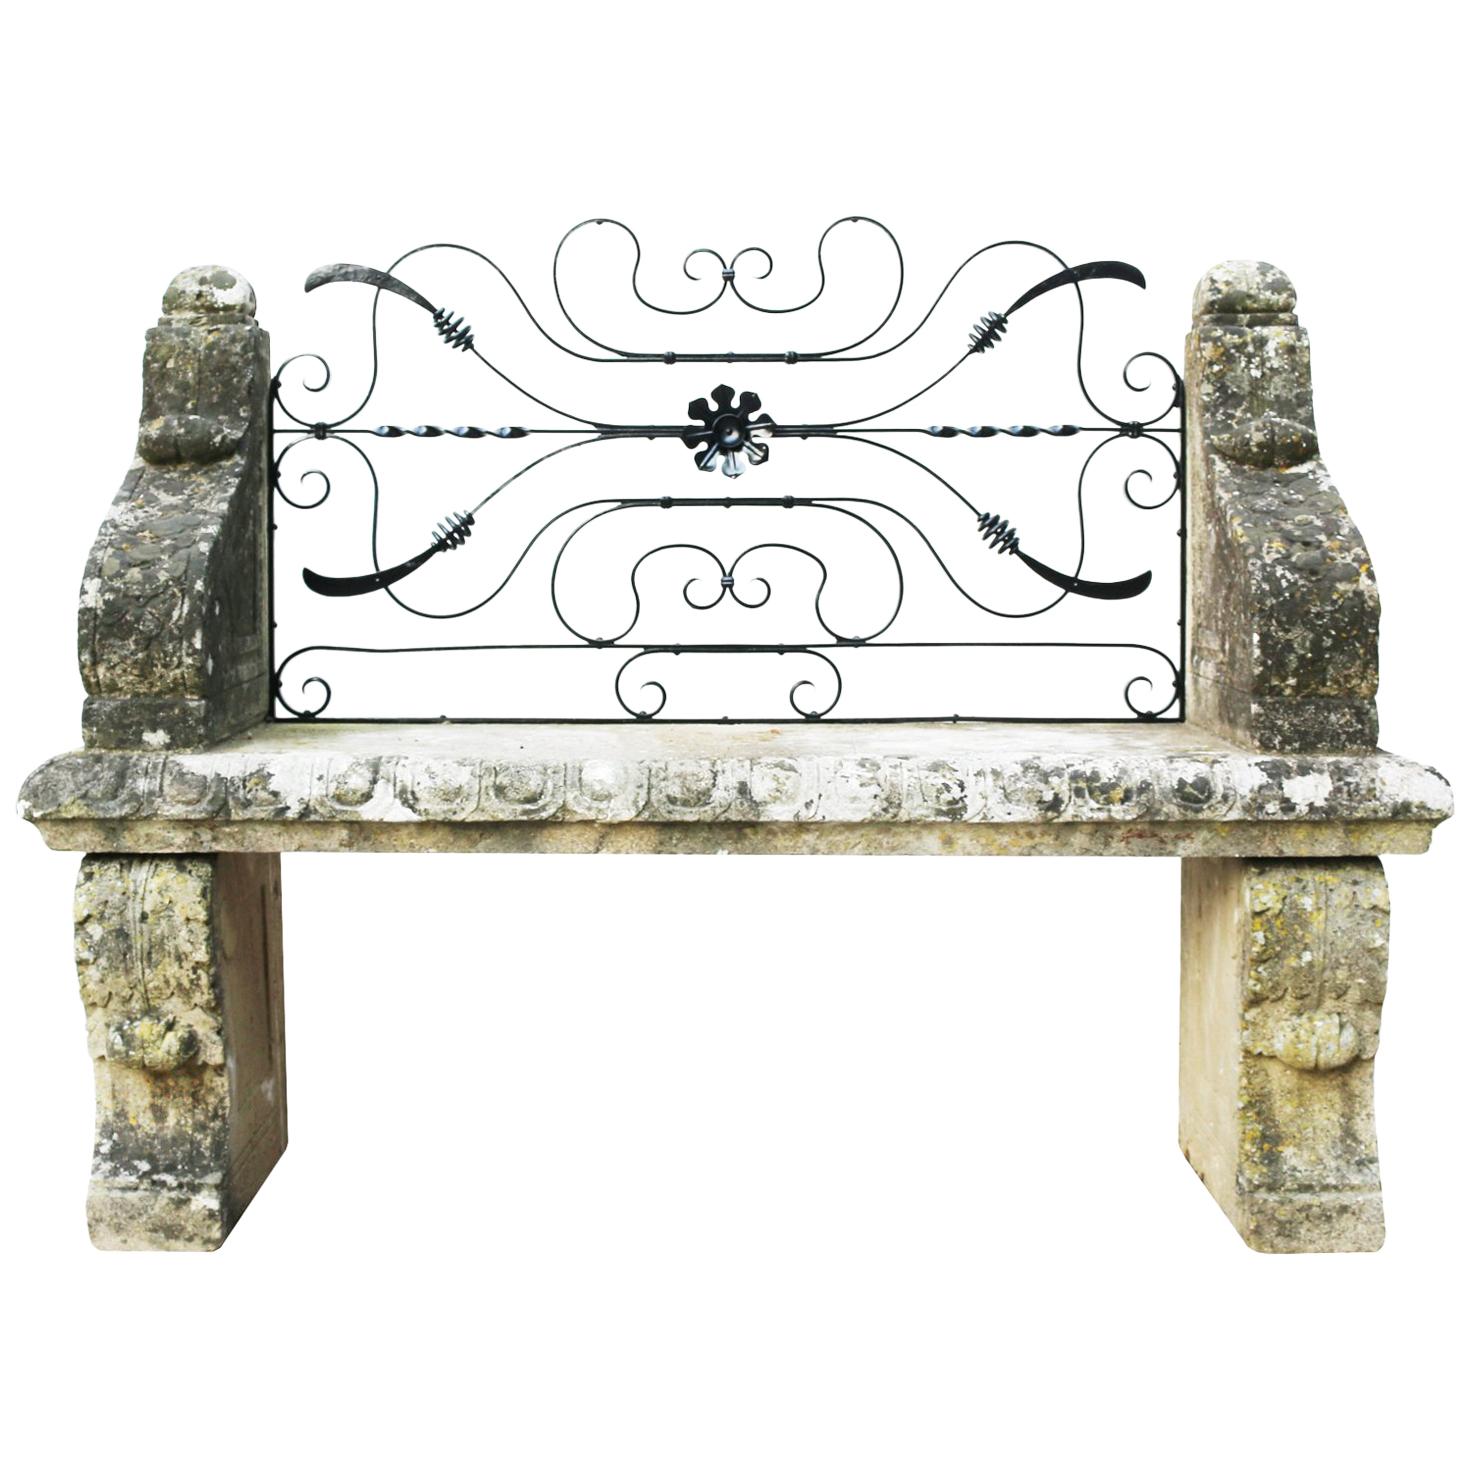 Carved Limestone Garden Bench Seat